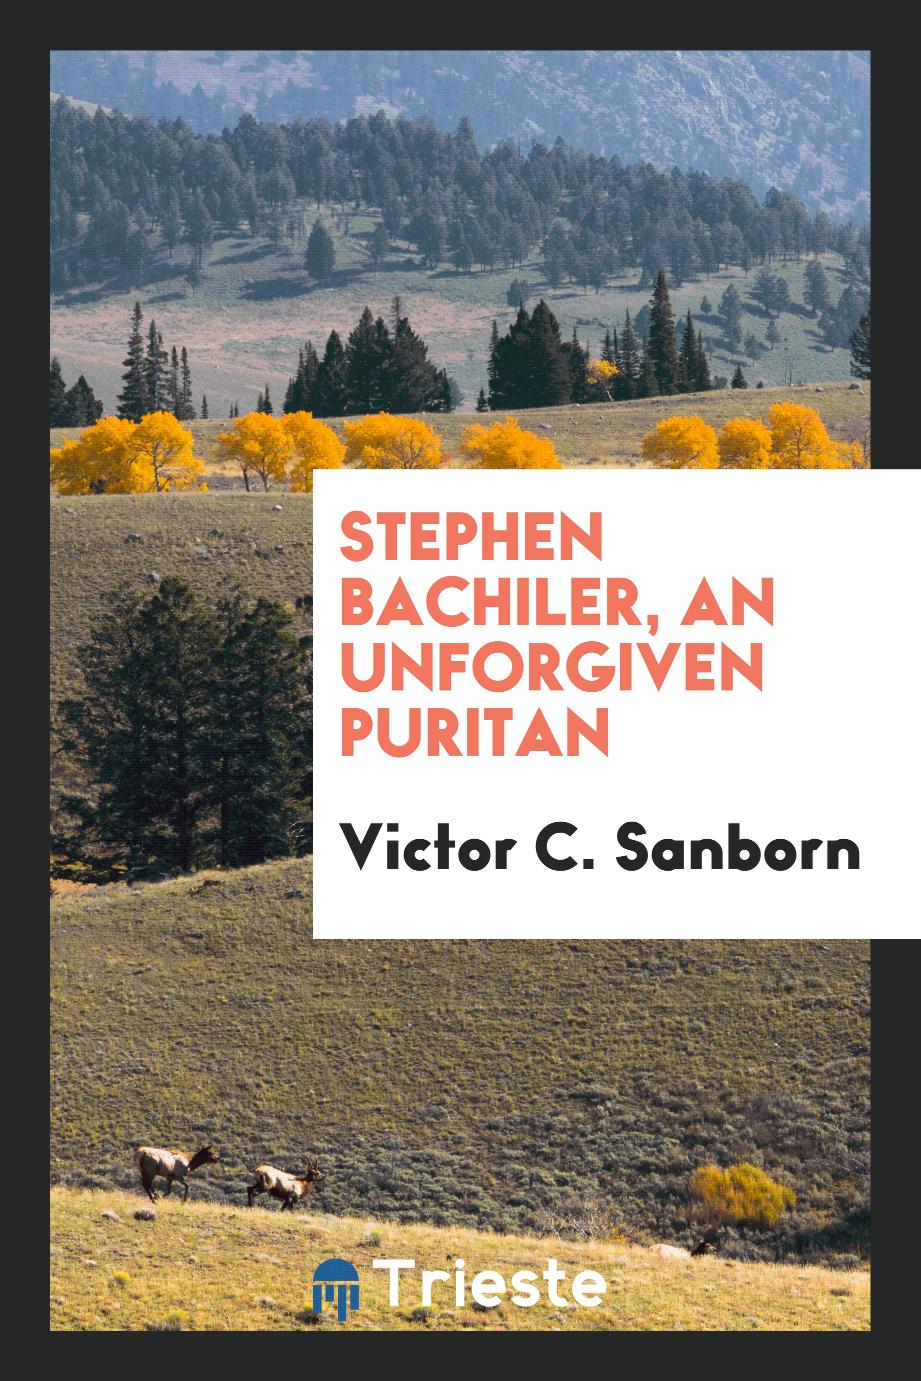 Stephen Bachiler, an unforgiven Puritan